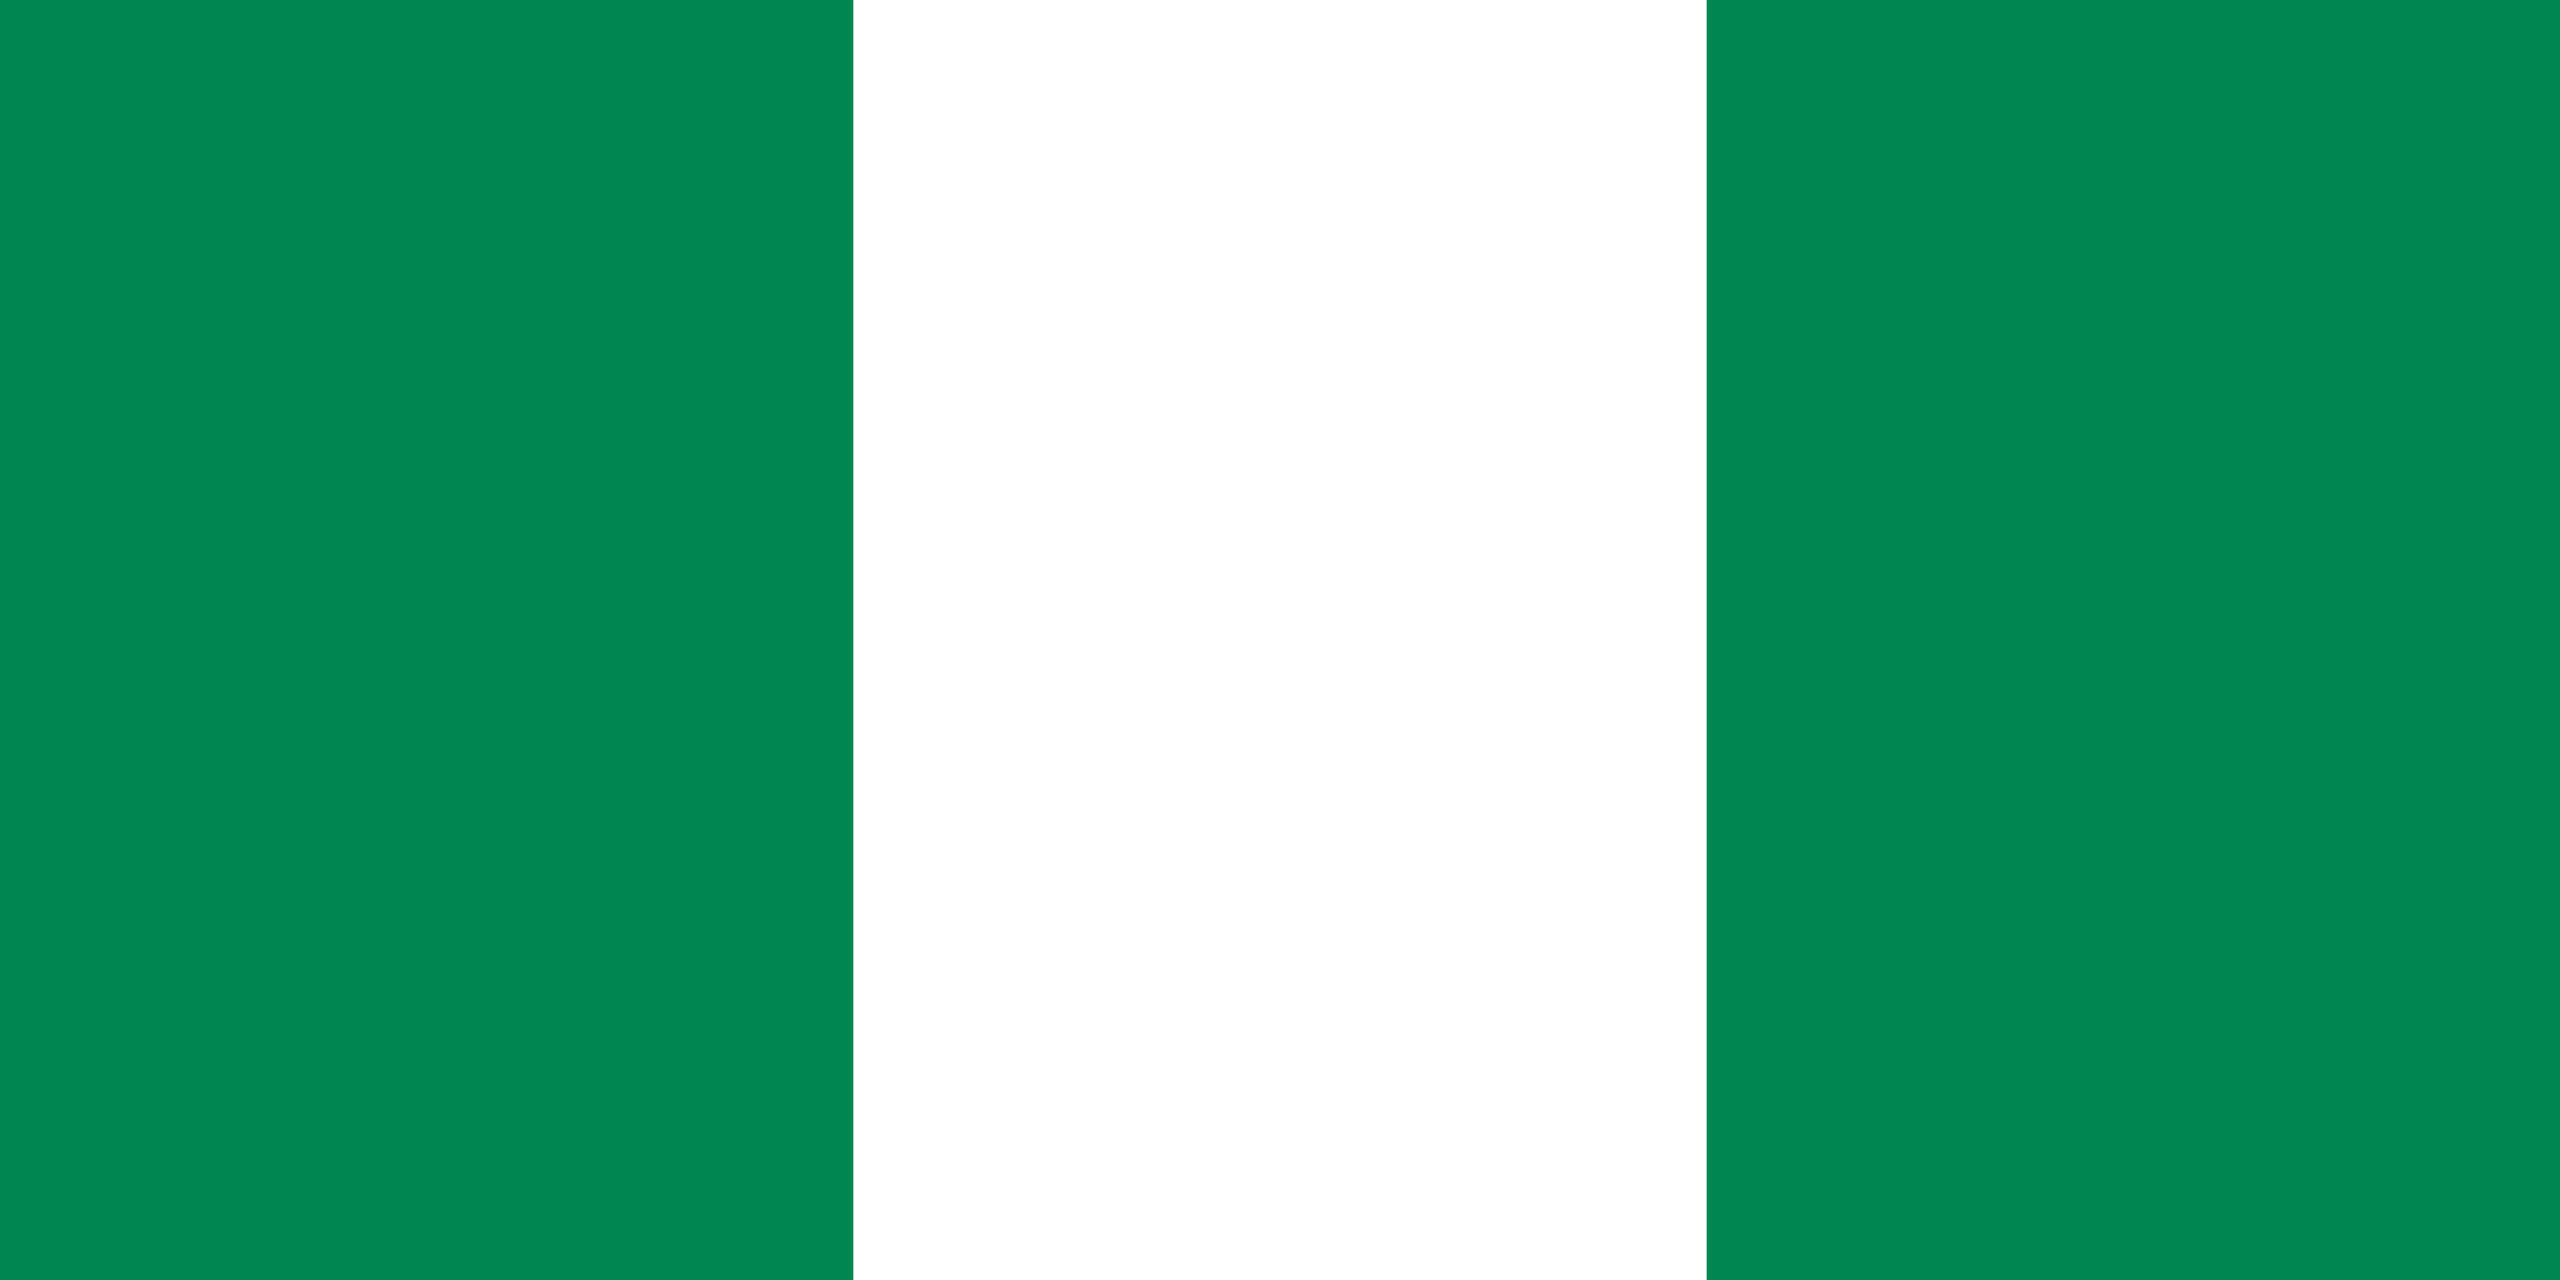 Annuaire de Commerce du Nigeria